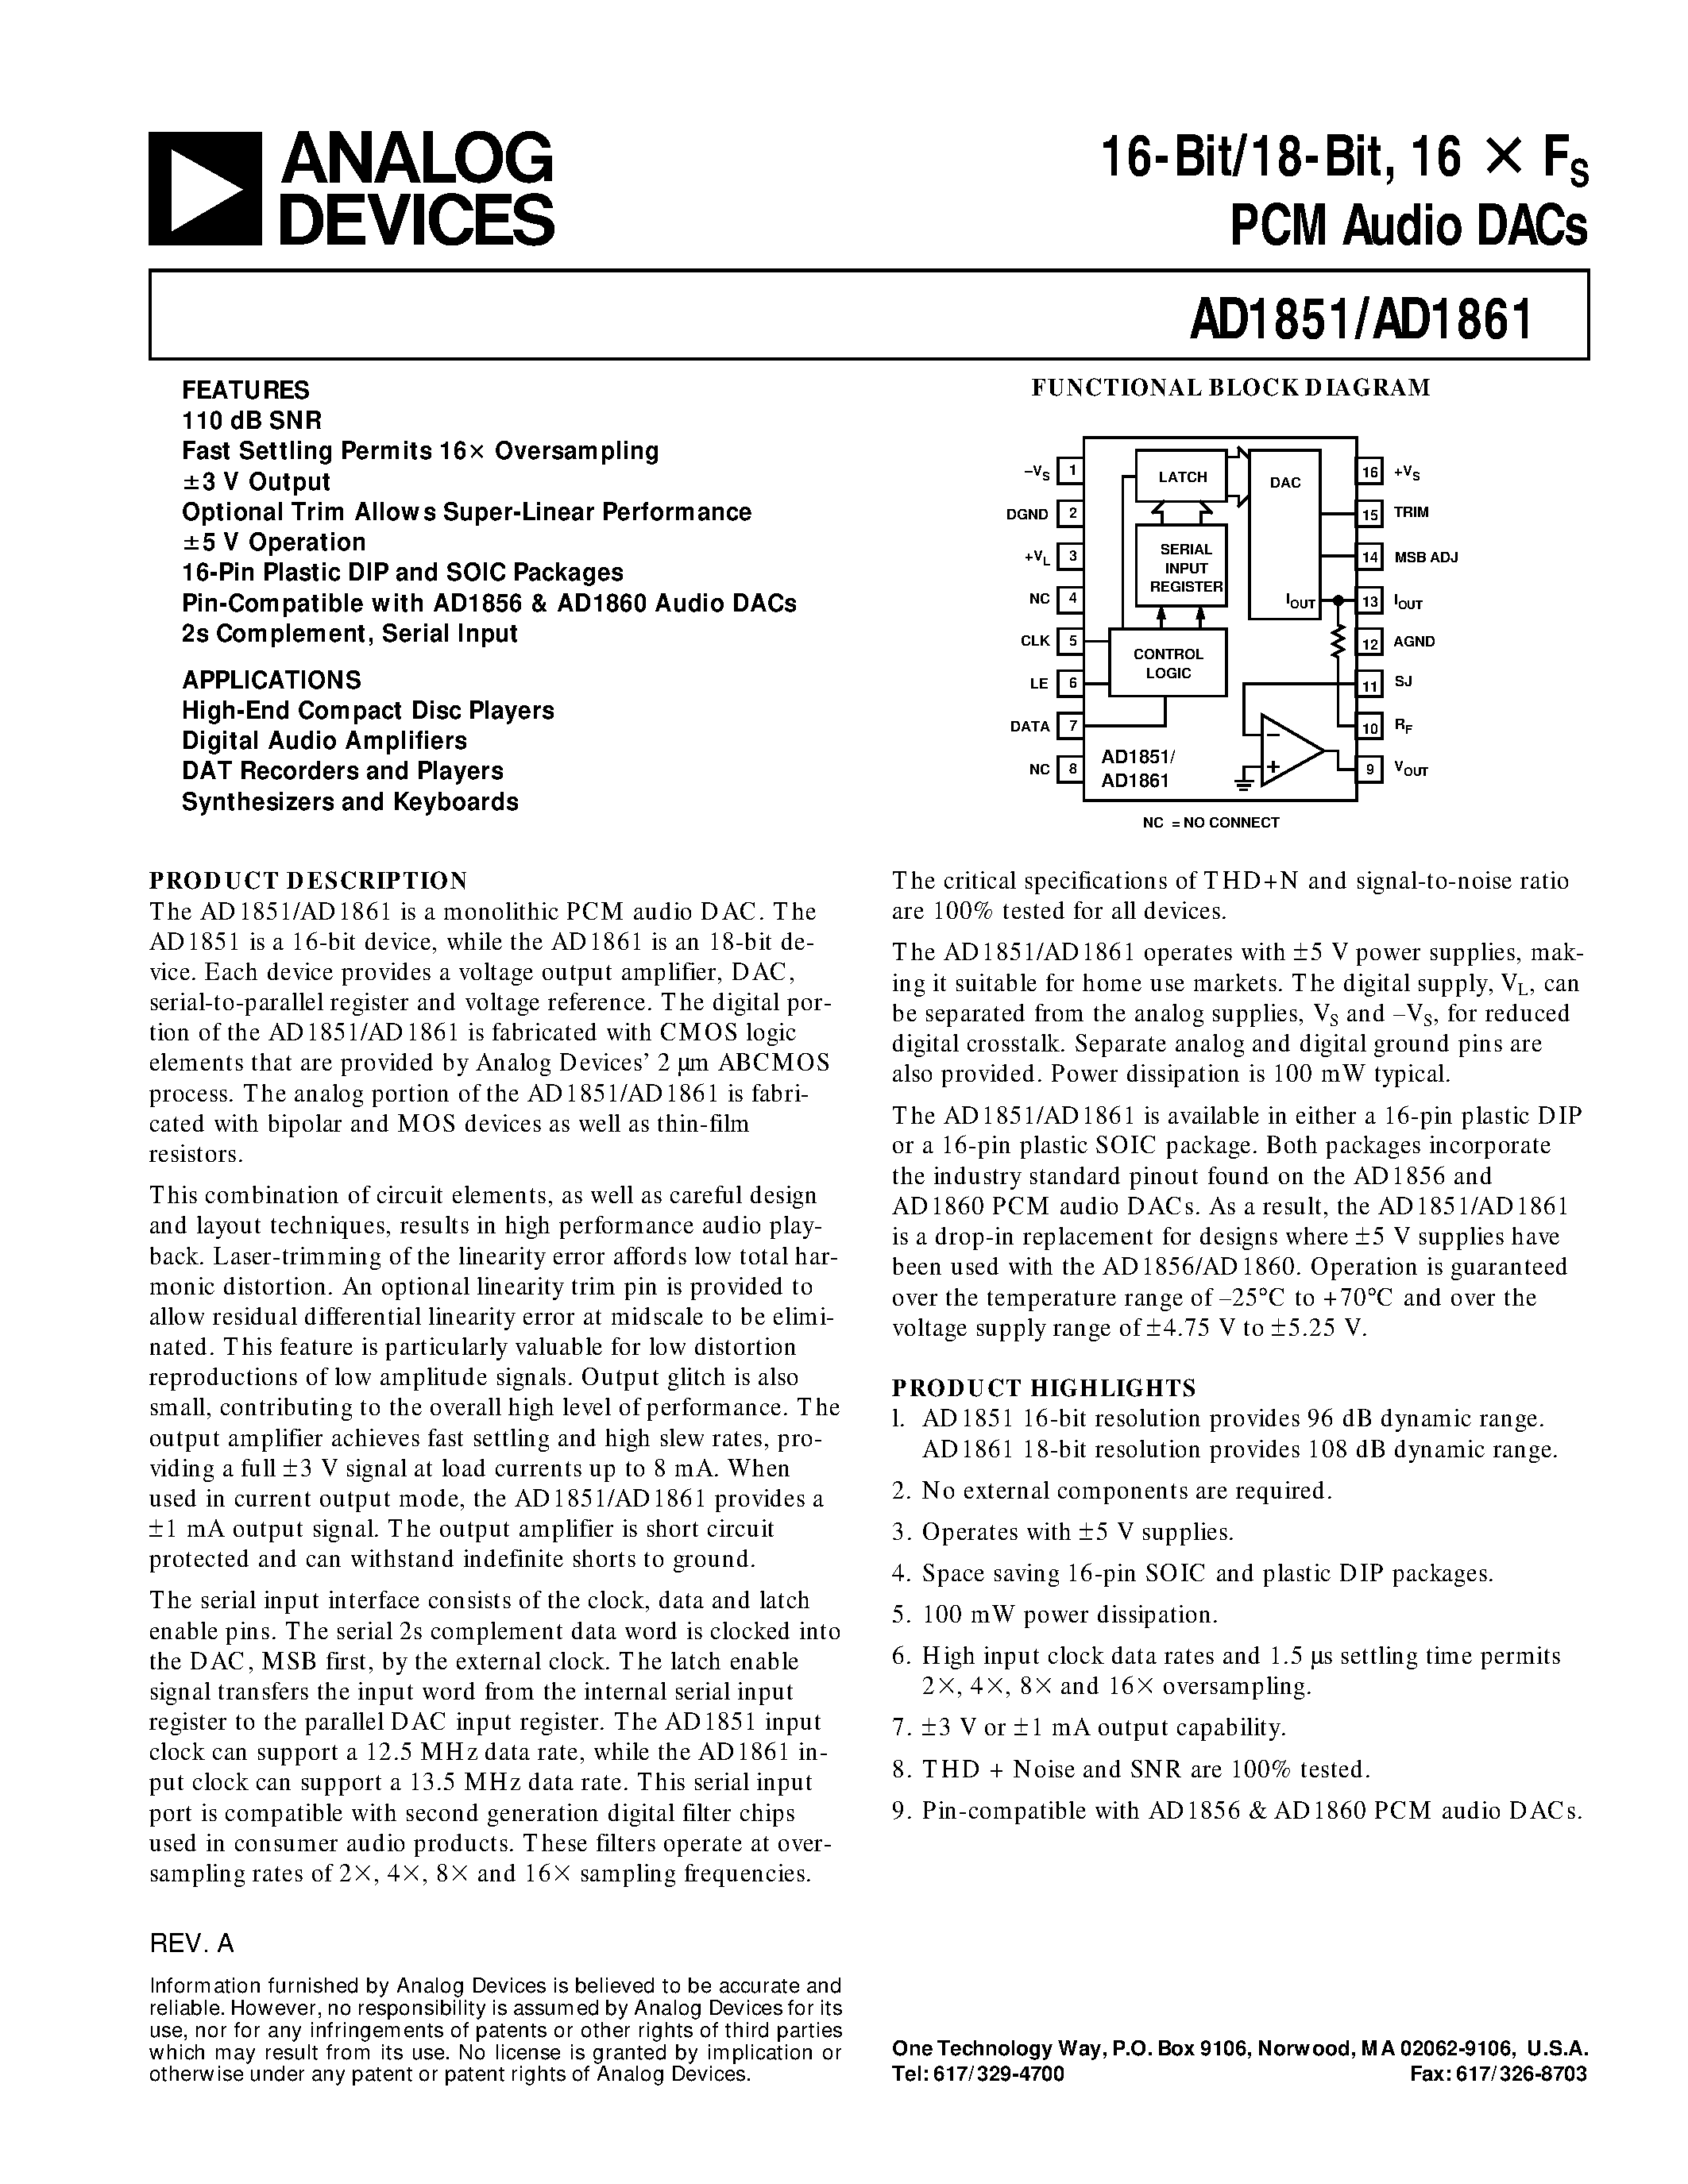 Datasheet AD1851N-J - 16-Bit/18-Bit/ 16 X Fs PCM Audio DACs page 1